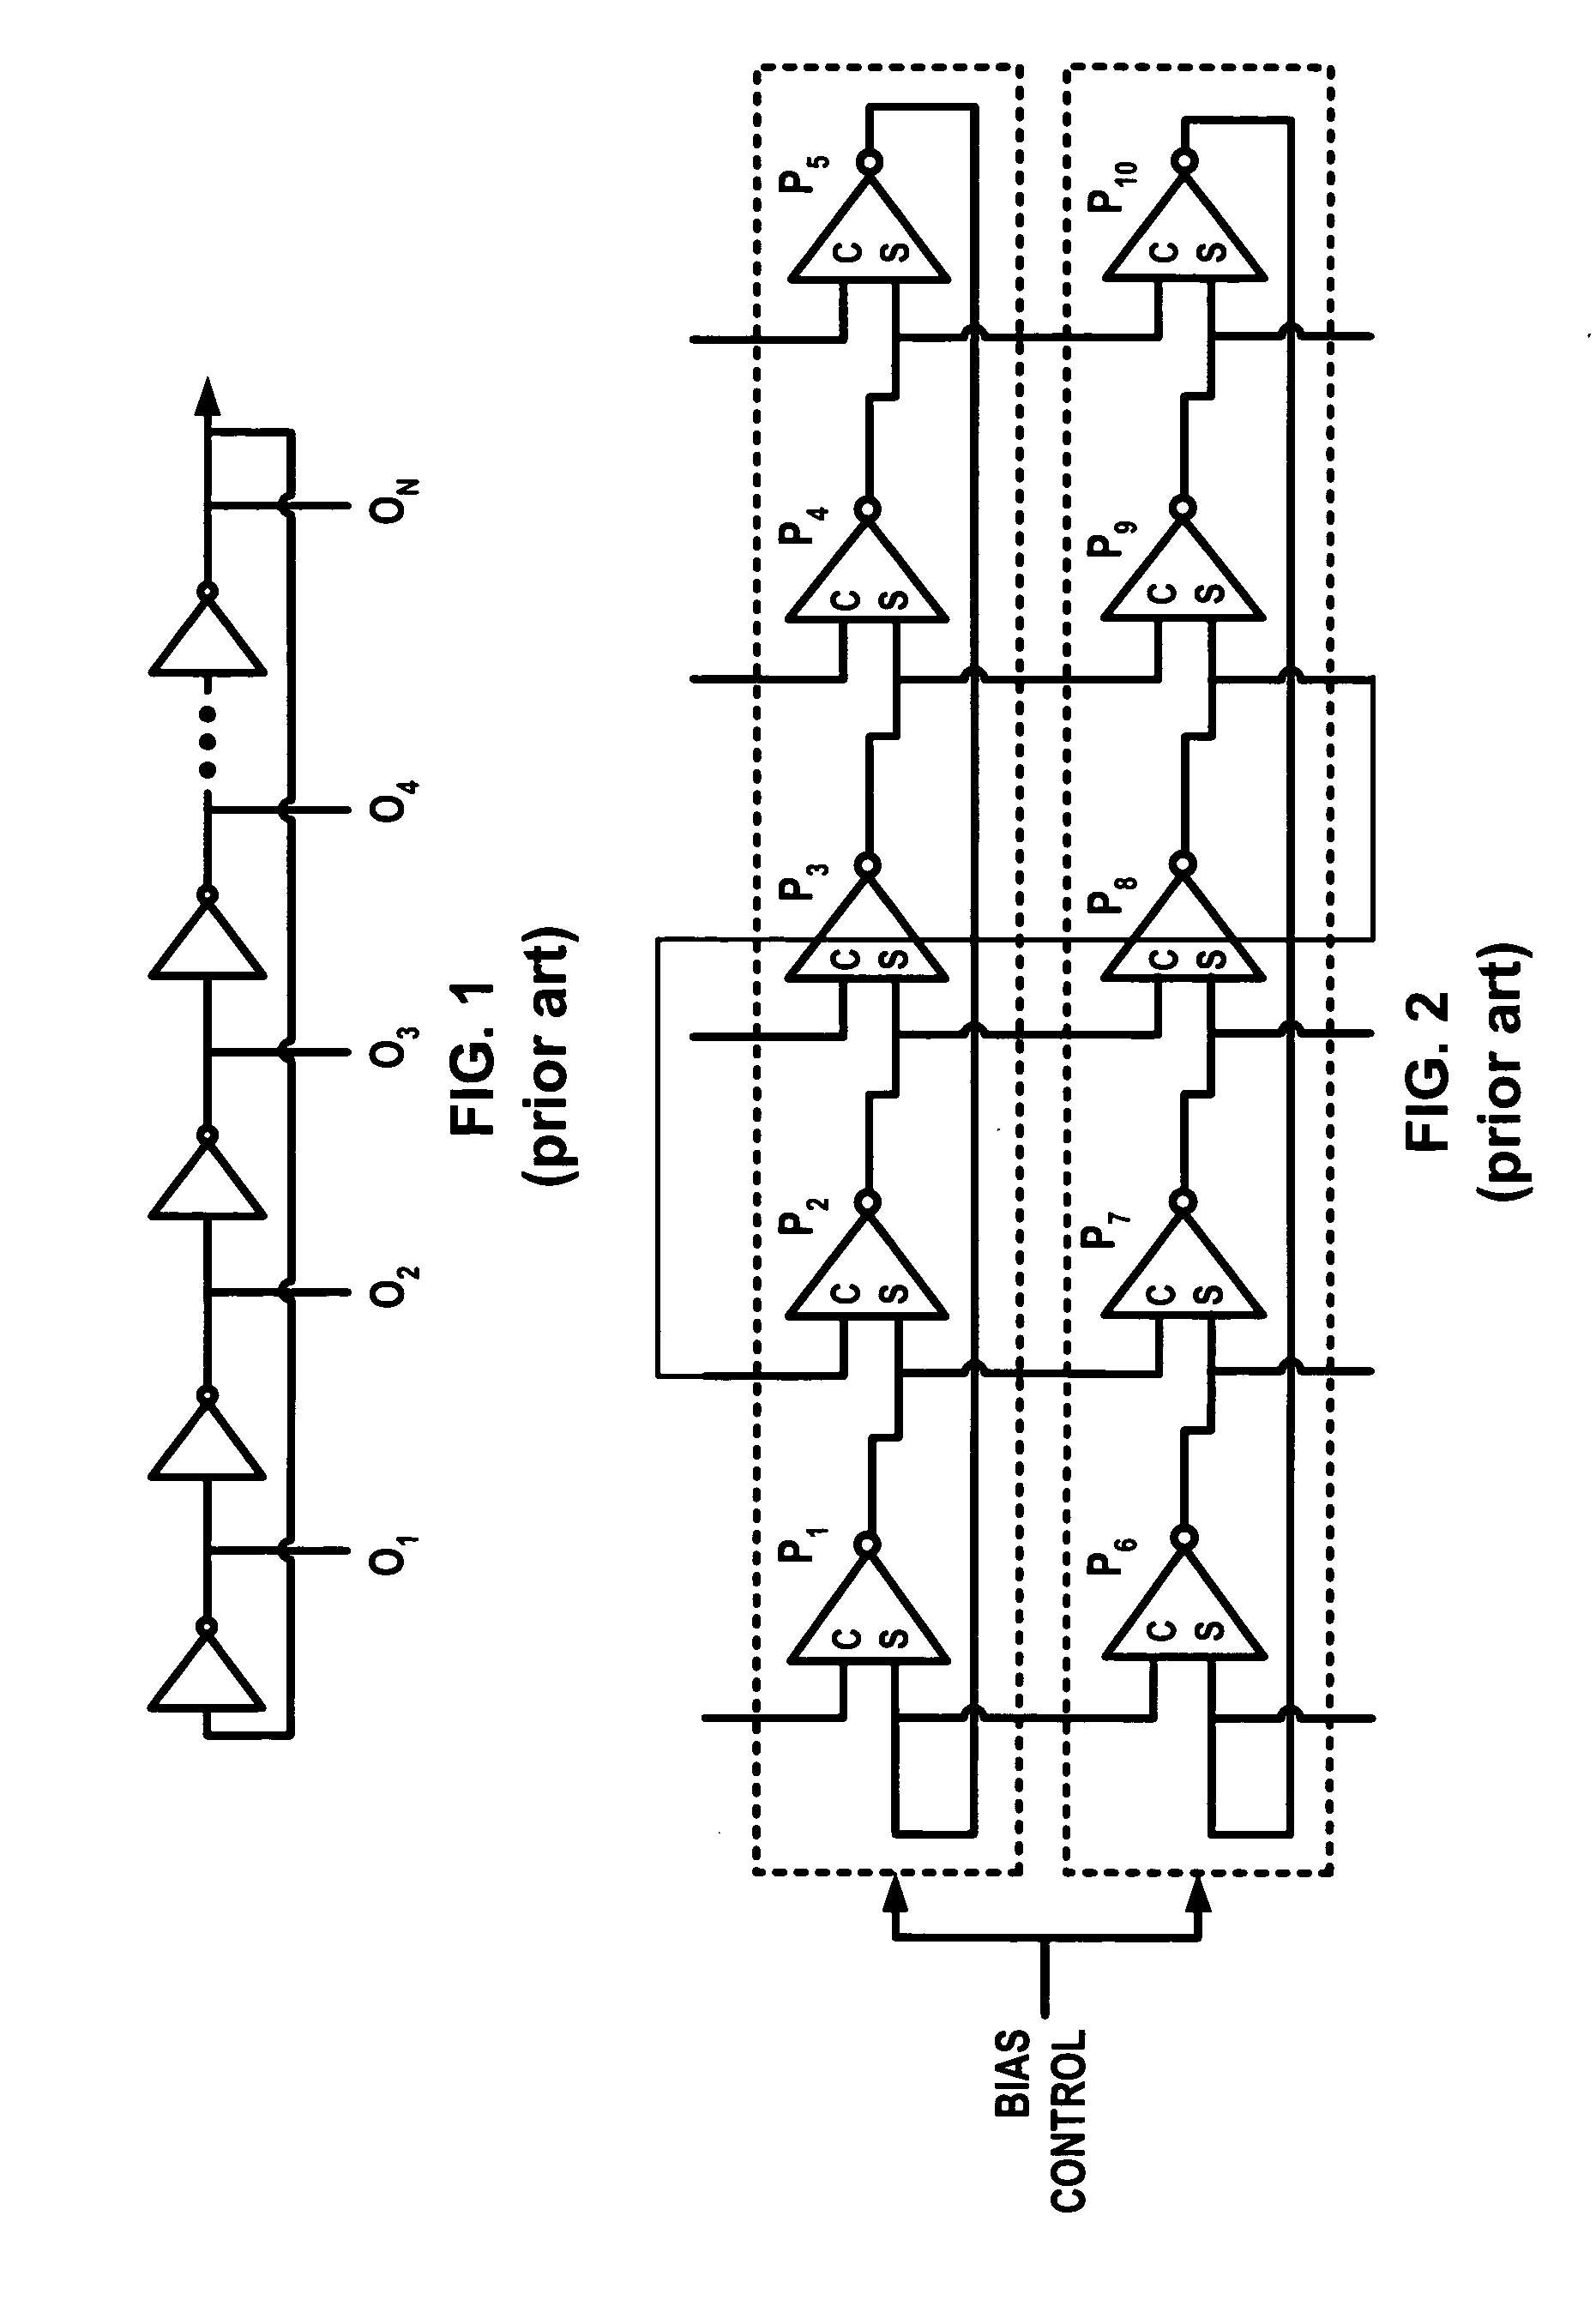 Array oscillator and polyphase clock generator